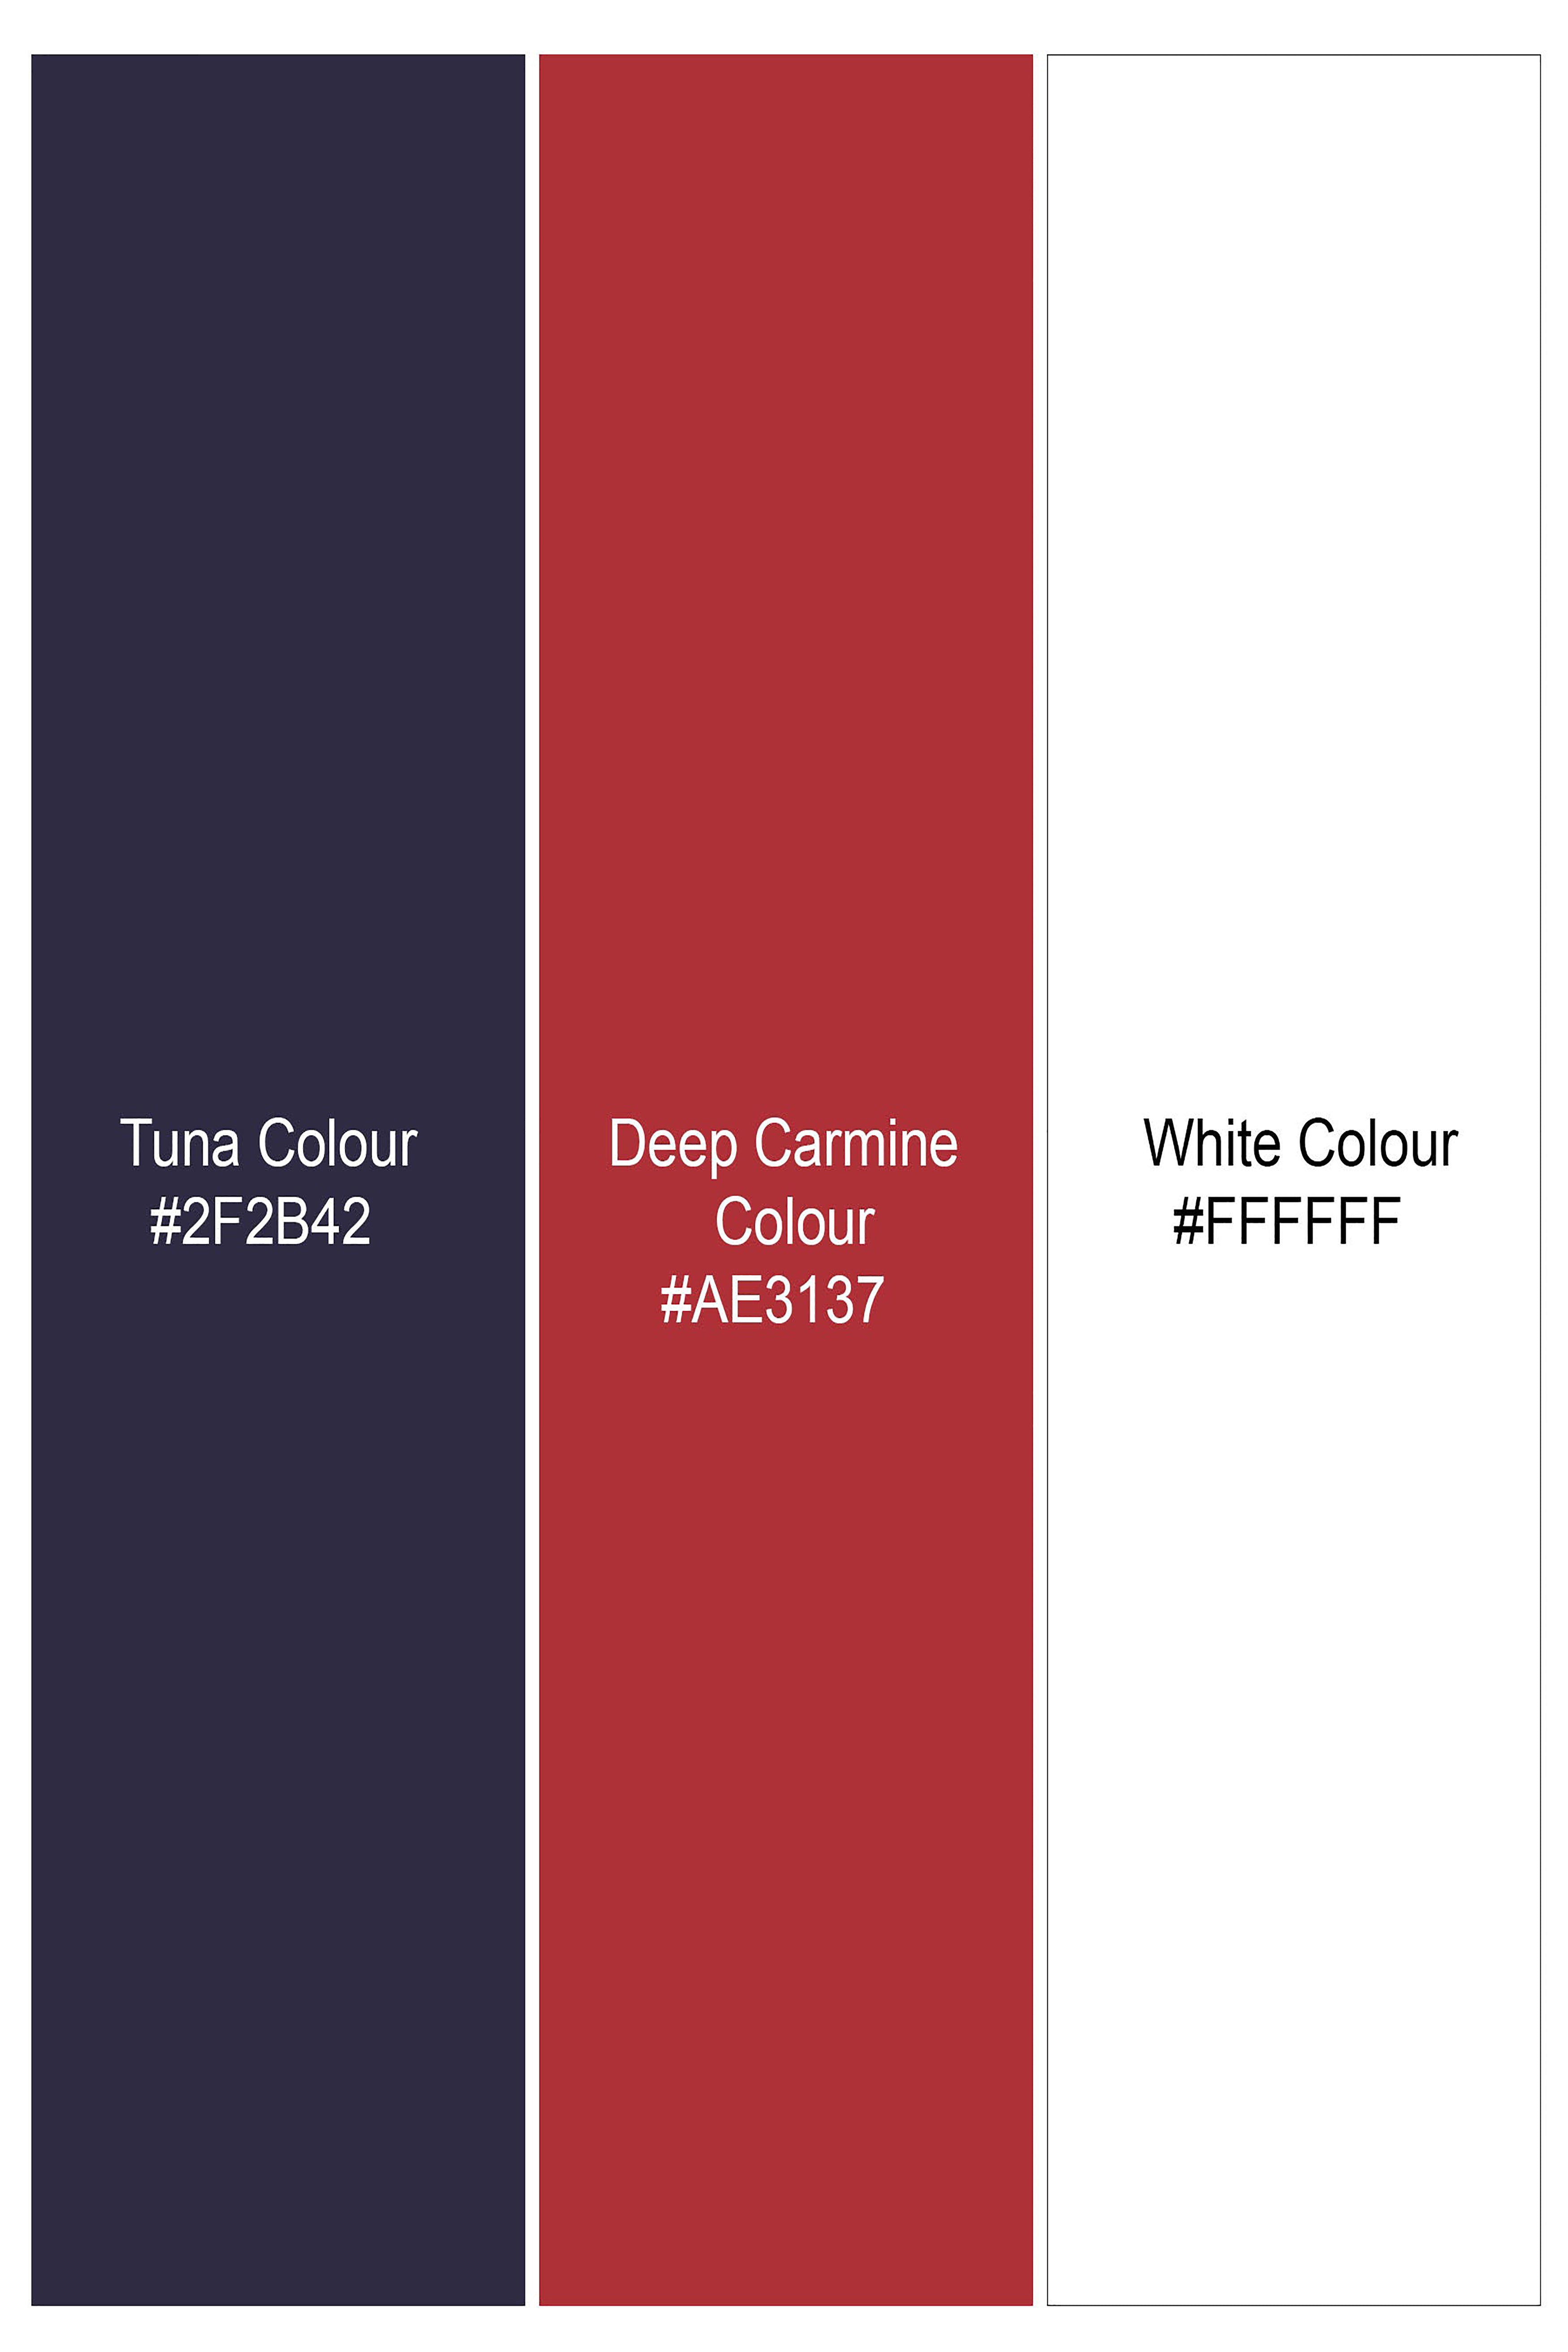 Deep Carmine Red and Tuna Blue Gingham Checkered Royal Oxford Shirt 12095-38, 12095-H-38, 12095-39, 12095-H-39, 12095-40, 12095-H-40, 12095-42, 12095-H-42, 12095-44, 12095-H-44, 12095-46, 12095-H-46, 12095-48, 12095-H-48, 12095-50, 12095-H-50, 12095-52, 12095-H-52